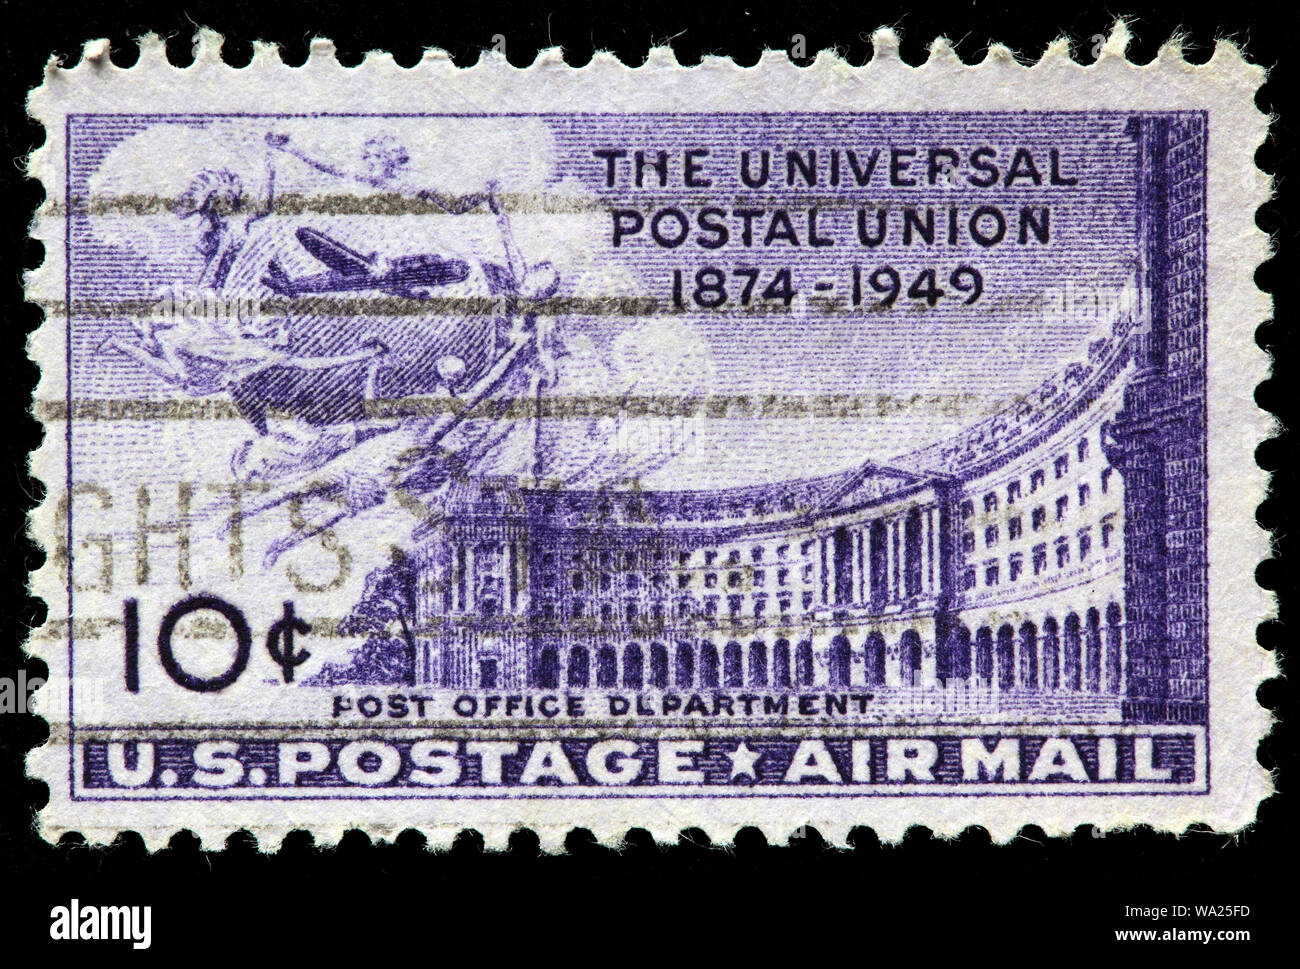 Post Office Department Building, UPU, Universal Postal Union, postage stamp, USA, 1949 Stock Photo